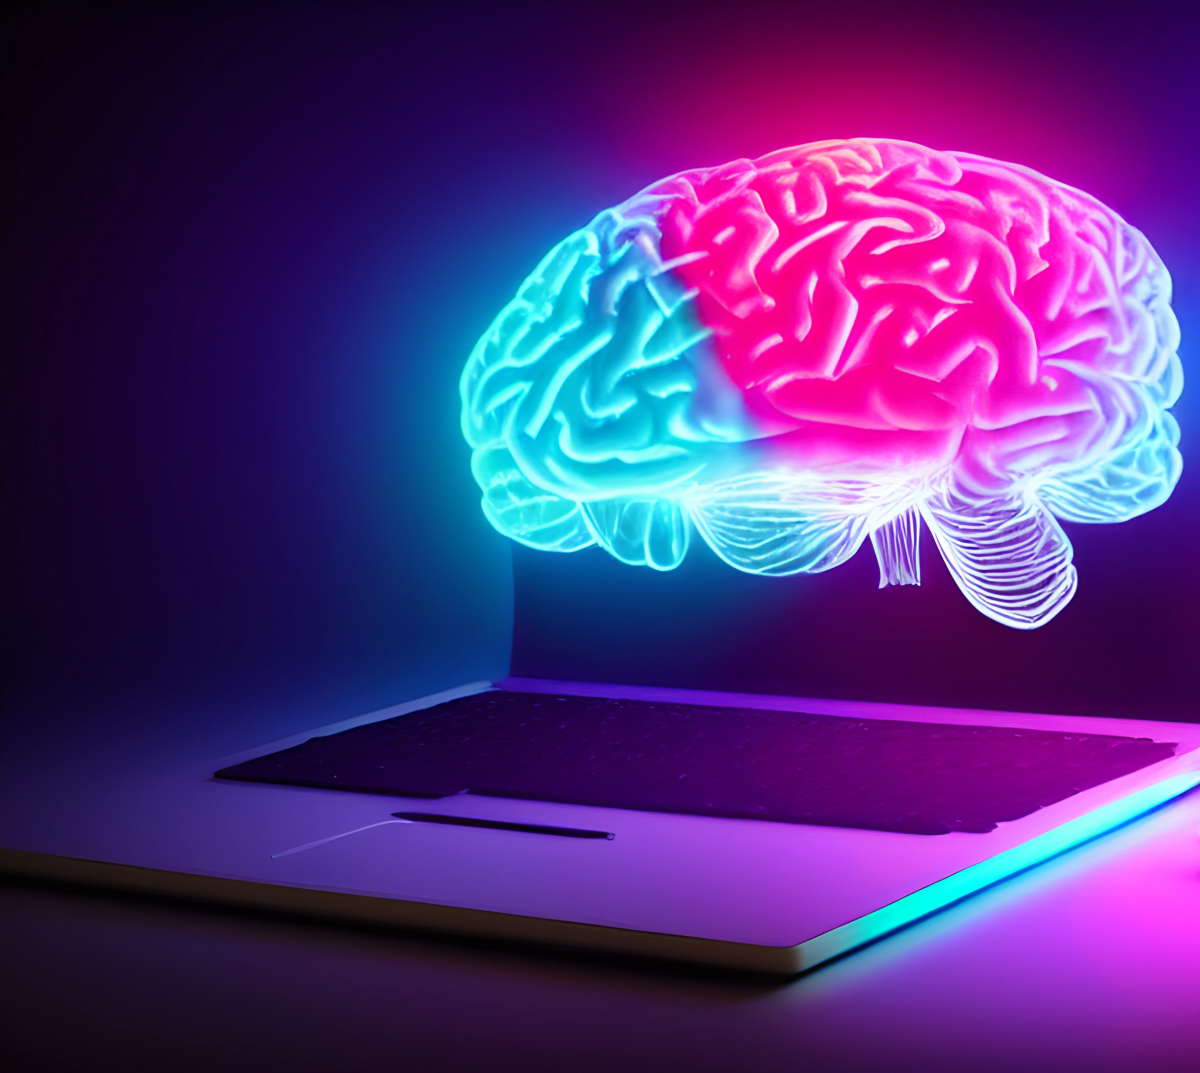 A laptop with an AI brain